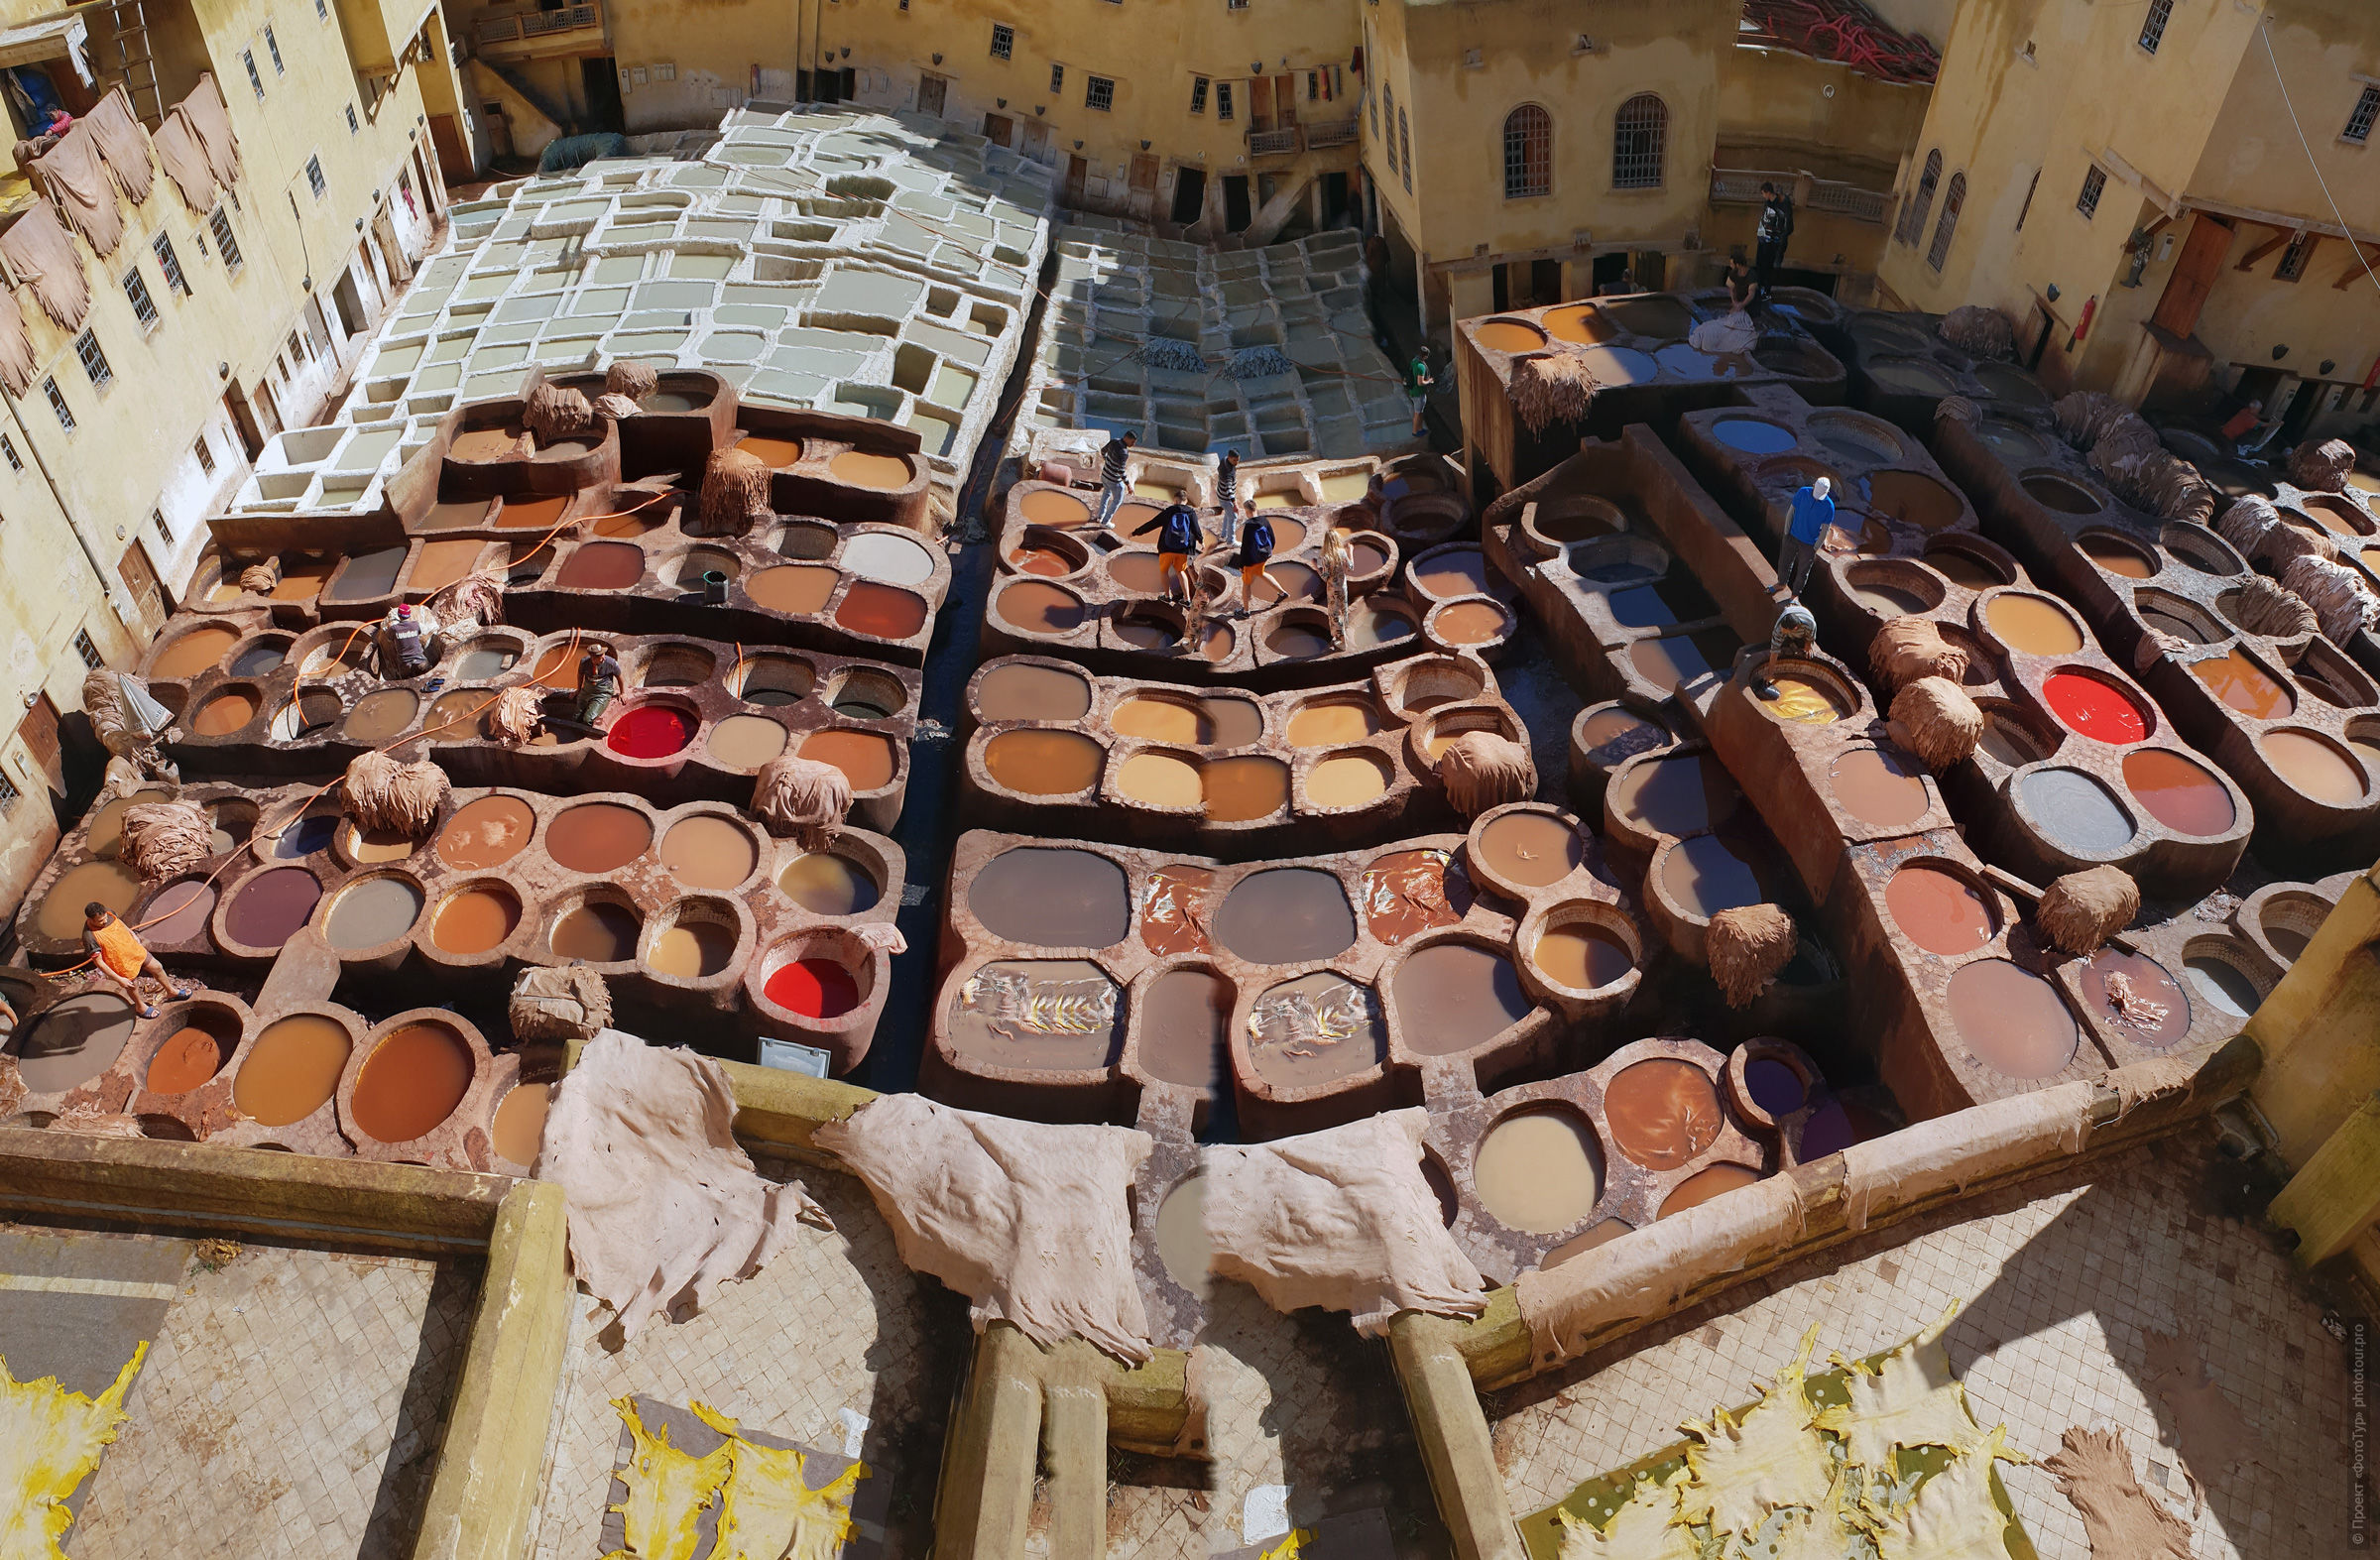 Shuara dyeing room, photo panorama. Adventure photo tour: medina, cascades, sands and ports of Morocco, April 4 - 17, 2020.